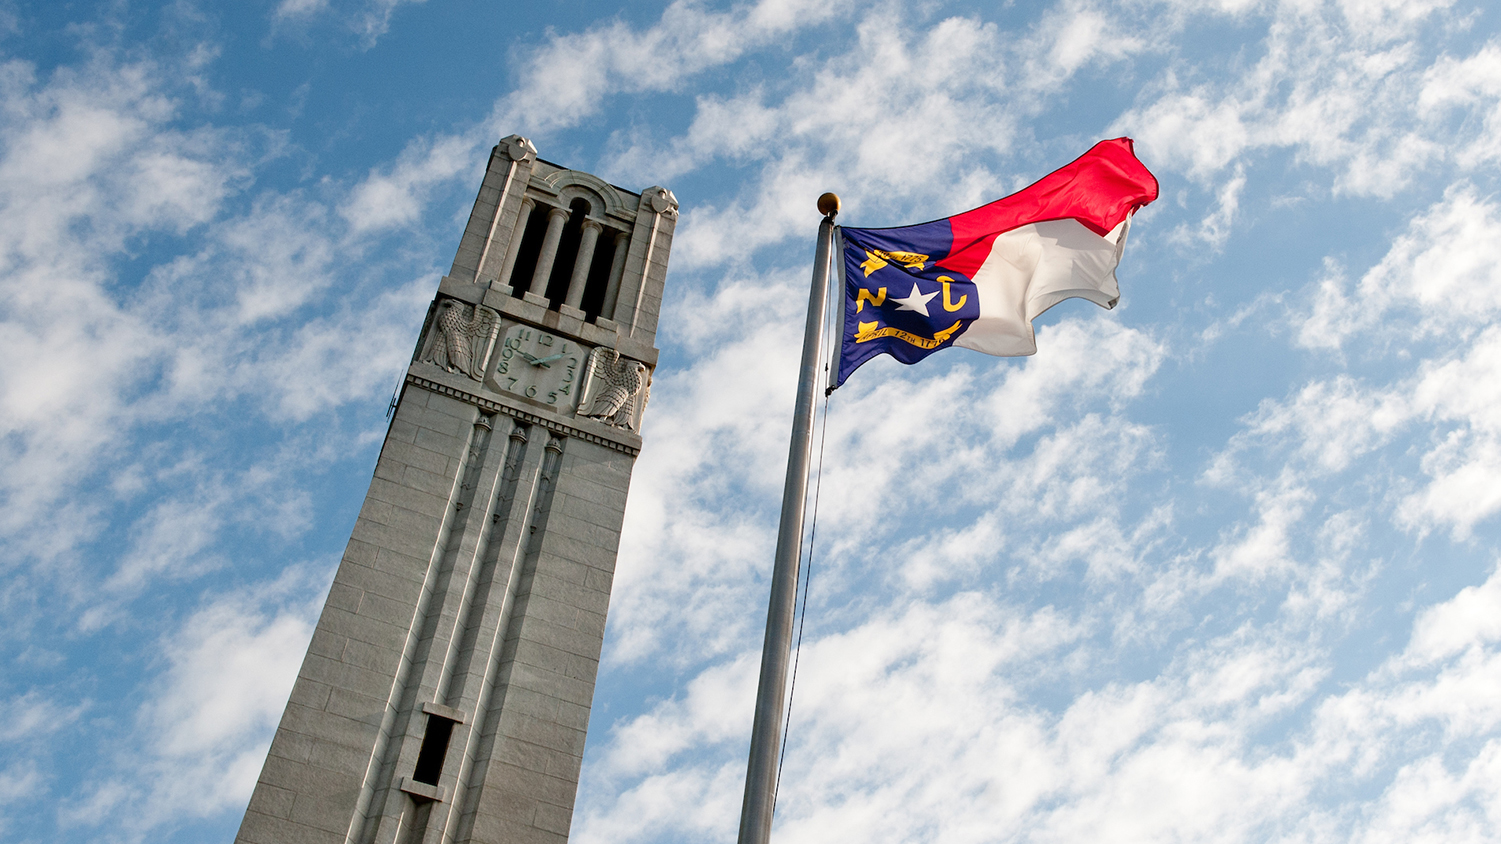 Memorial Belltower with NC flag